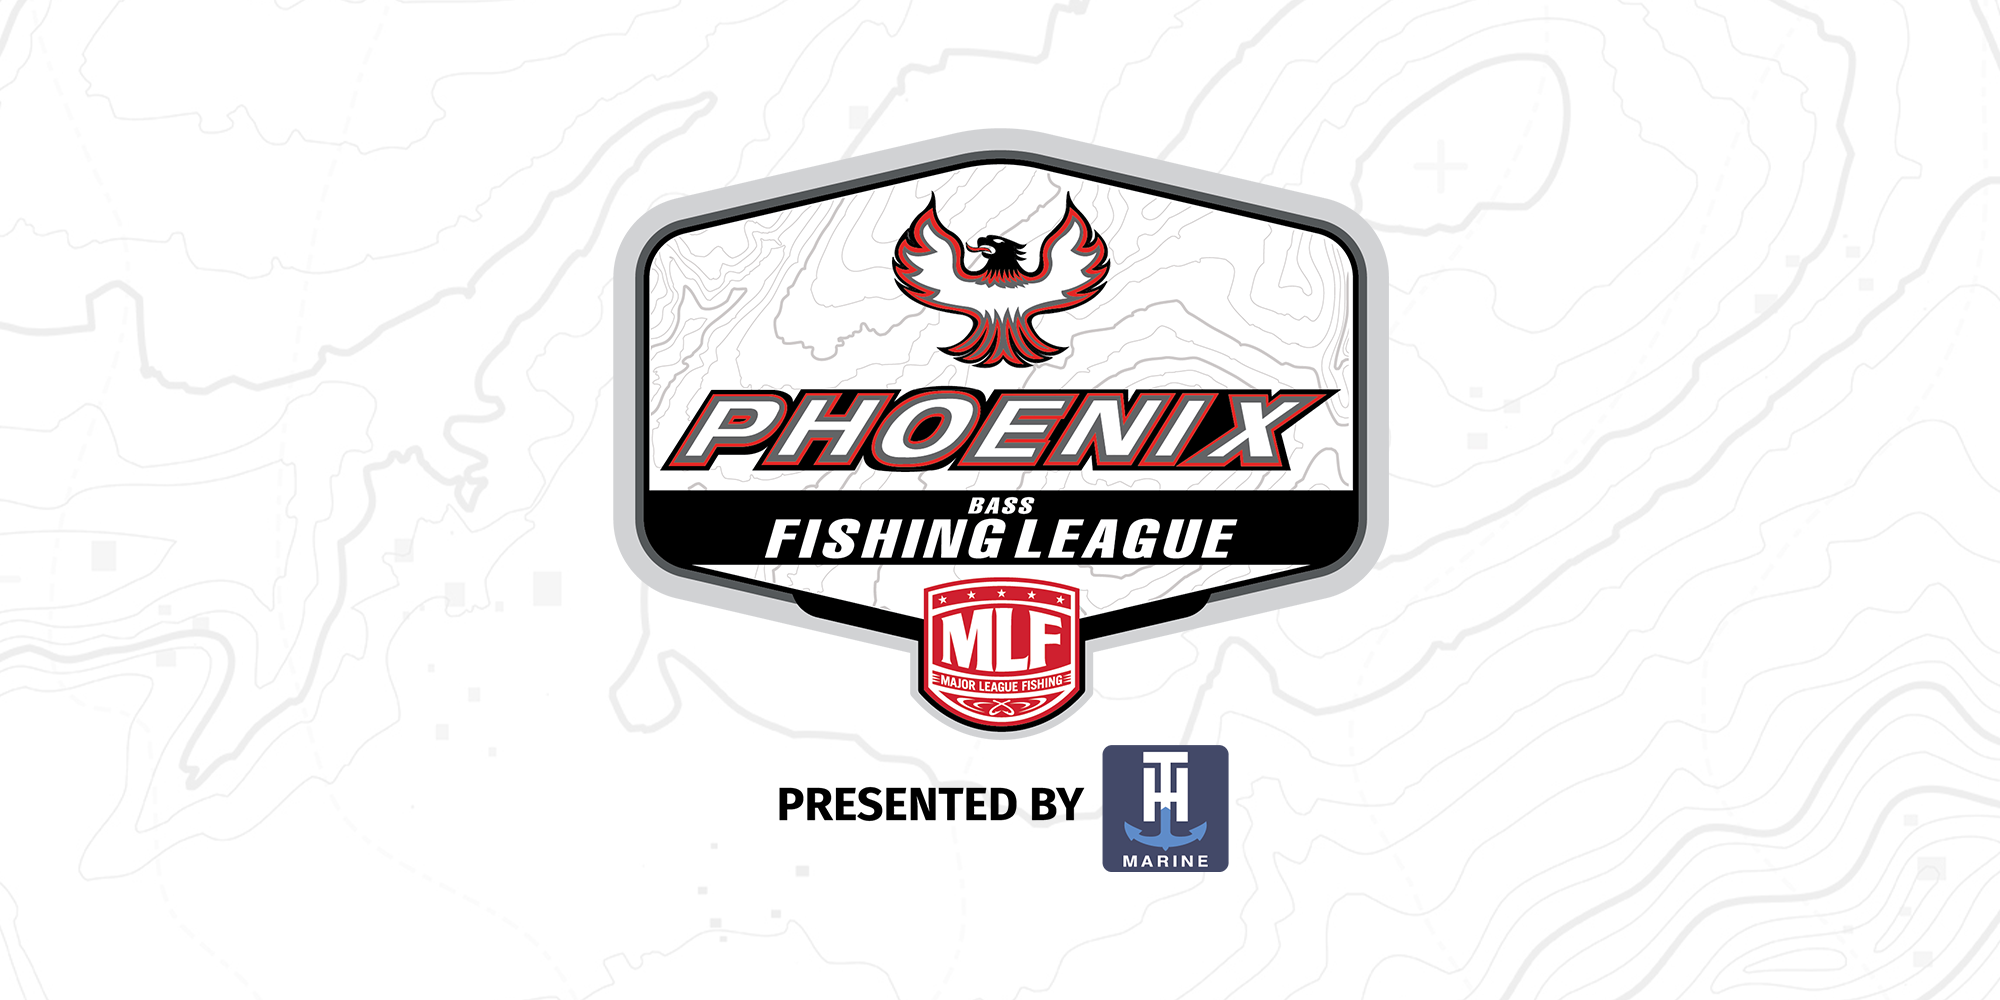 Phoenix Bass Fishing League Tournament on Lake St. Clair Cancelled